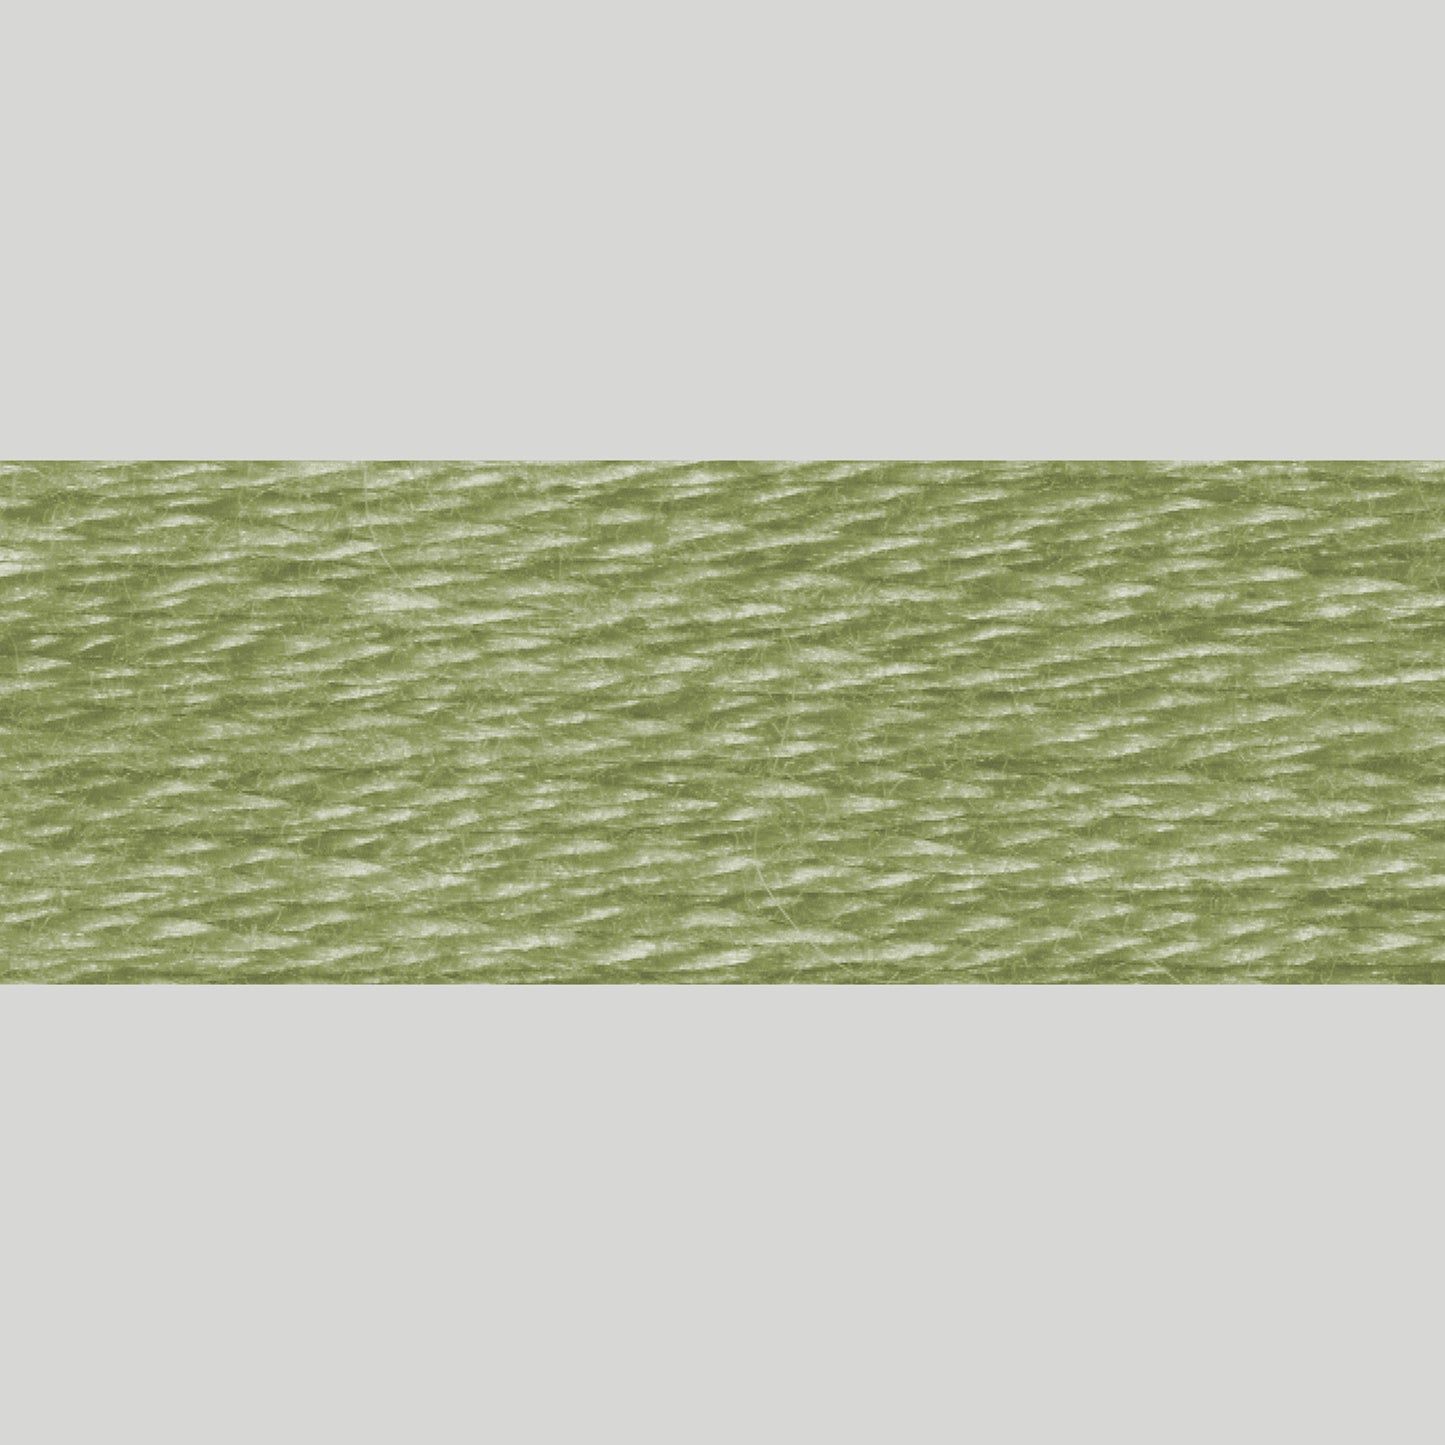 DMC Embroidery Floss - 3052 Medium Green Gray Alternative View #1